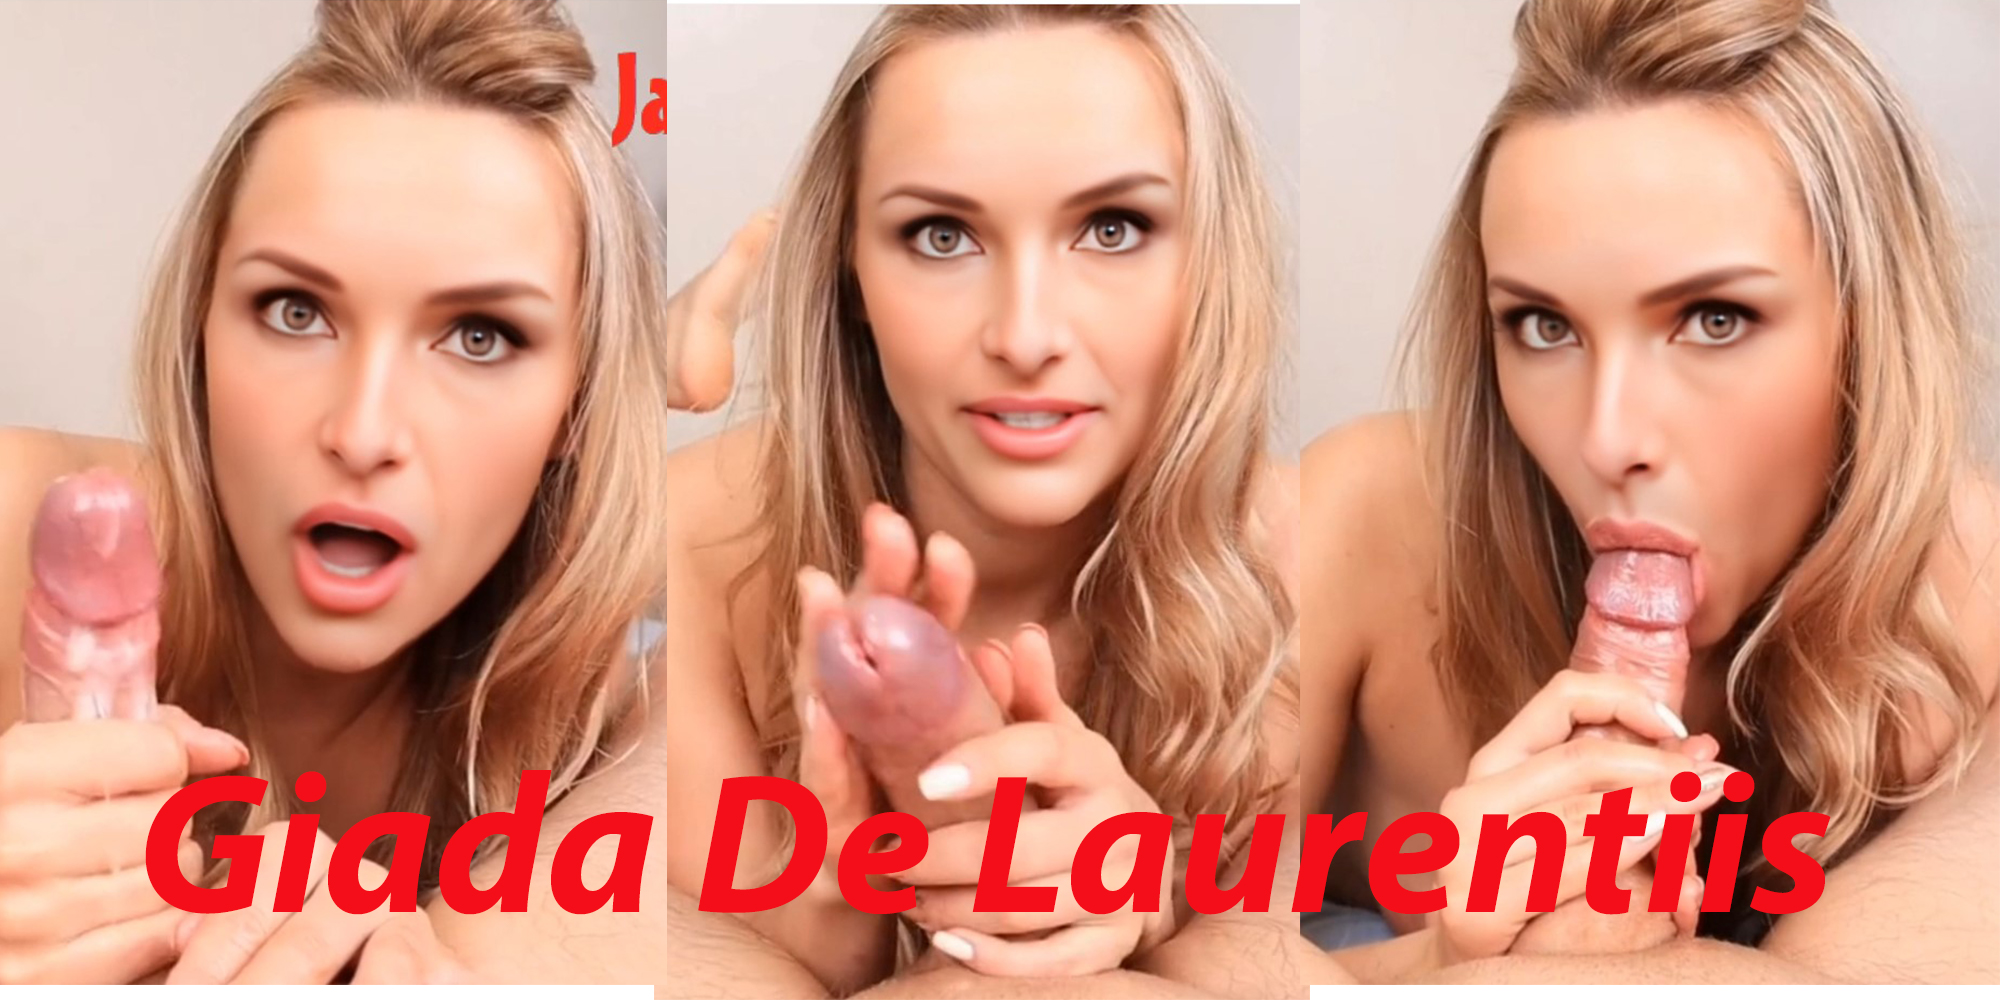 Giada De Laurentiis amazing teasing and blowjob